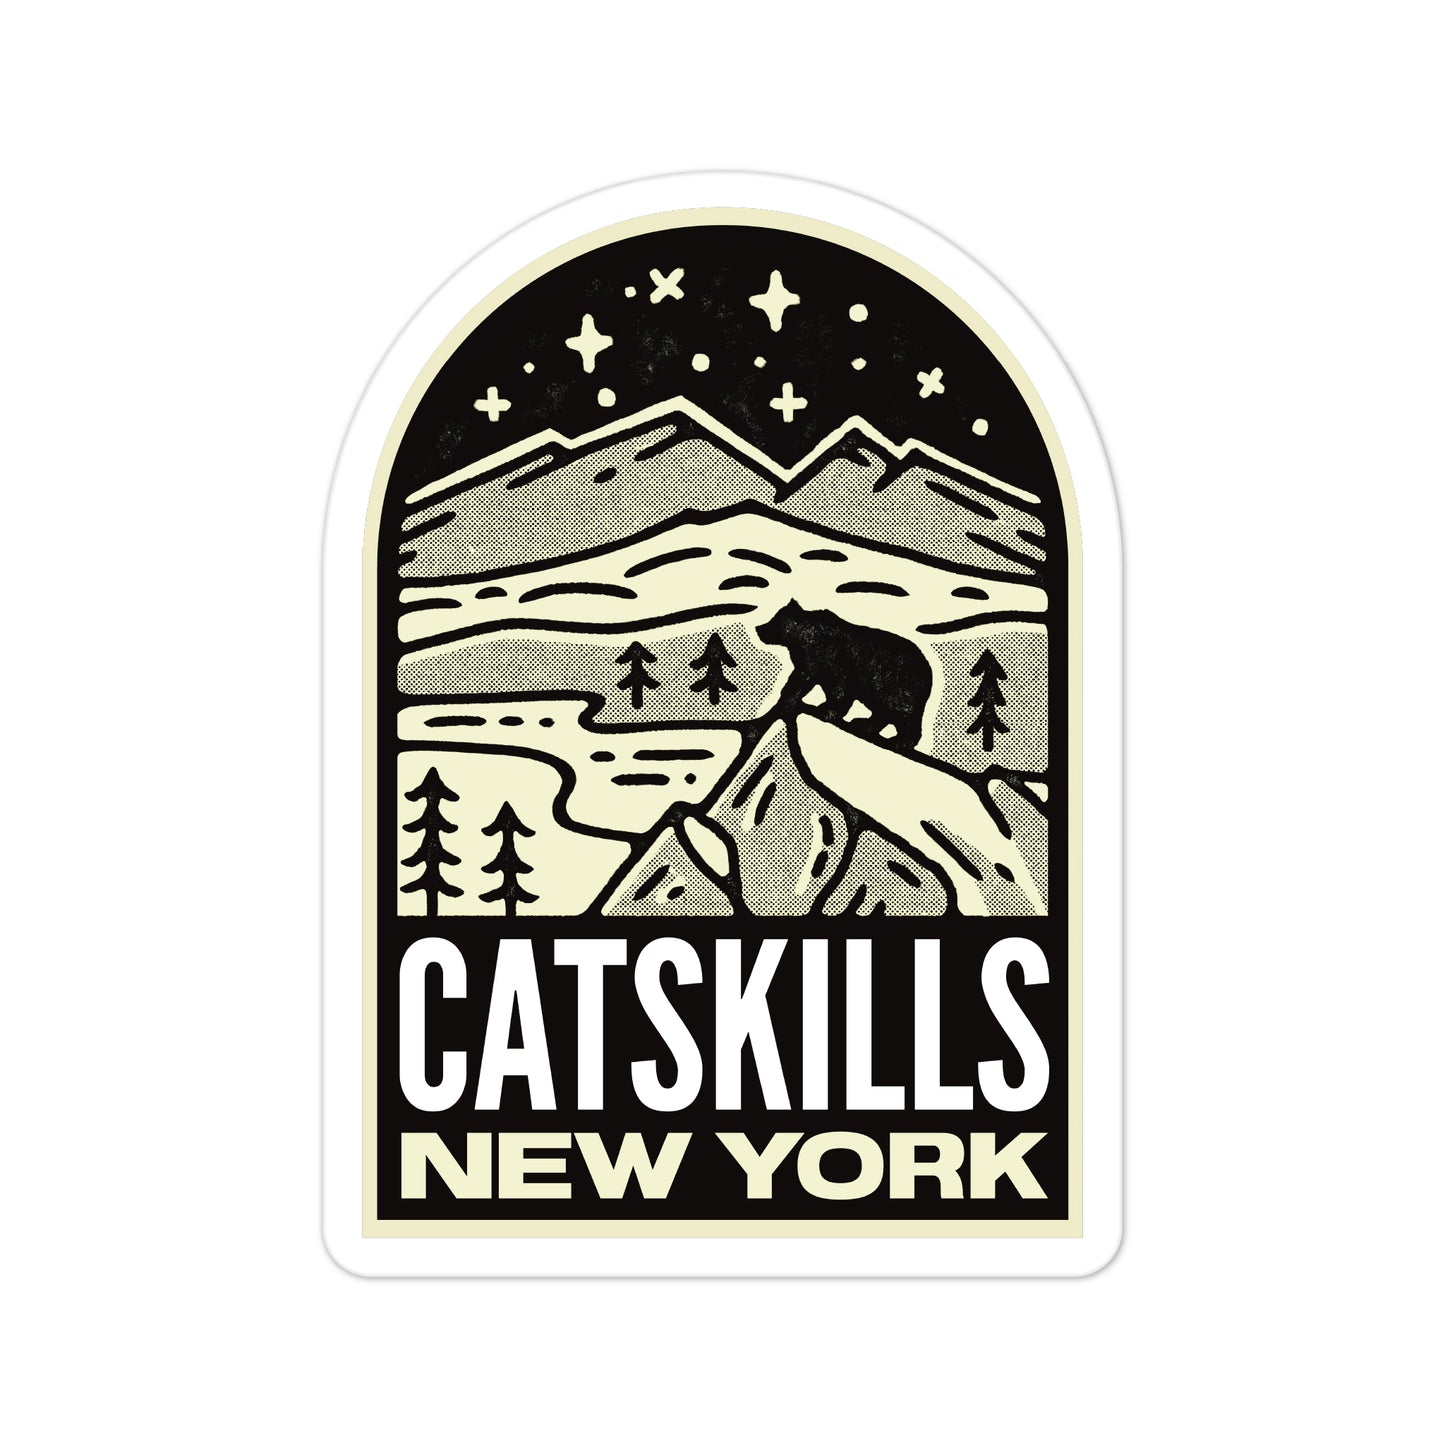 A sticker of the Catskills